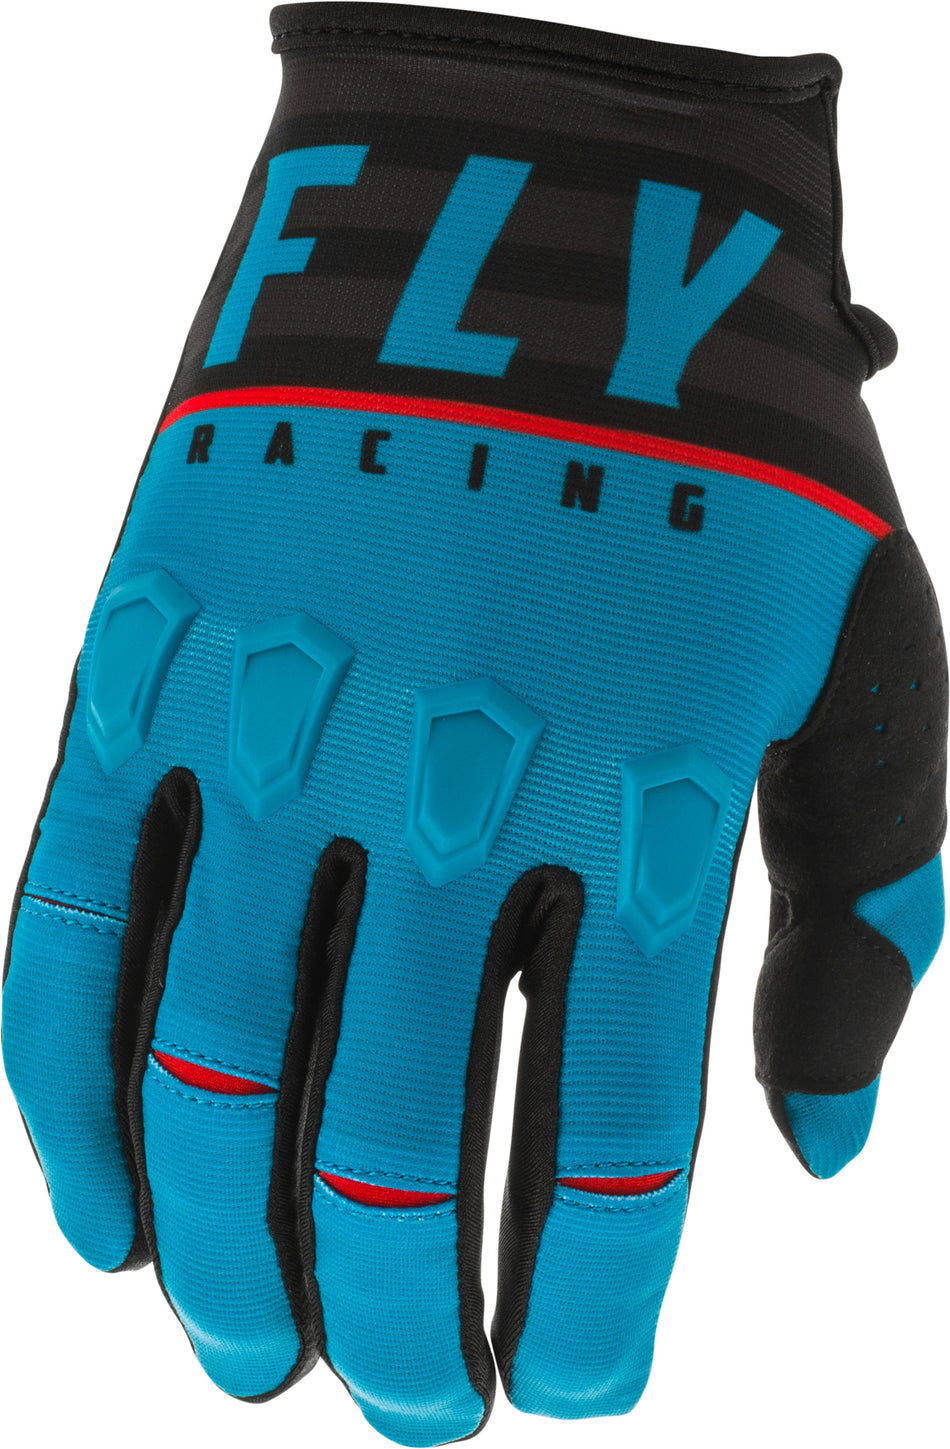 FLY RACING Kinetic K120 Gloves Blue/Black/Red Sz 06 373-41906